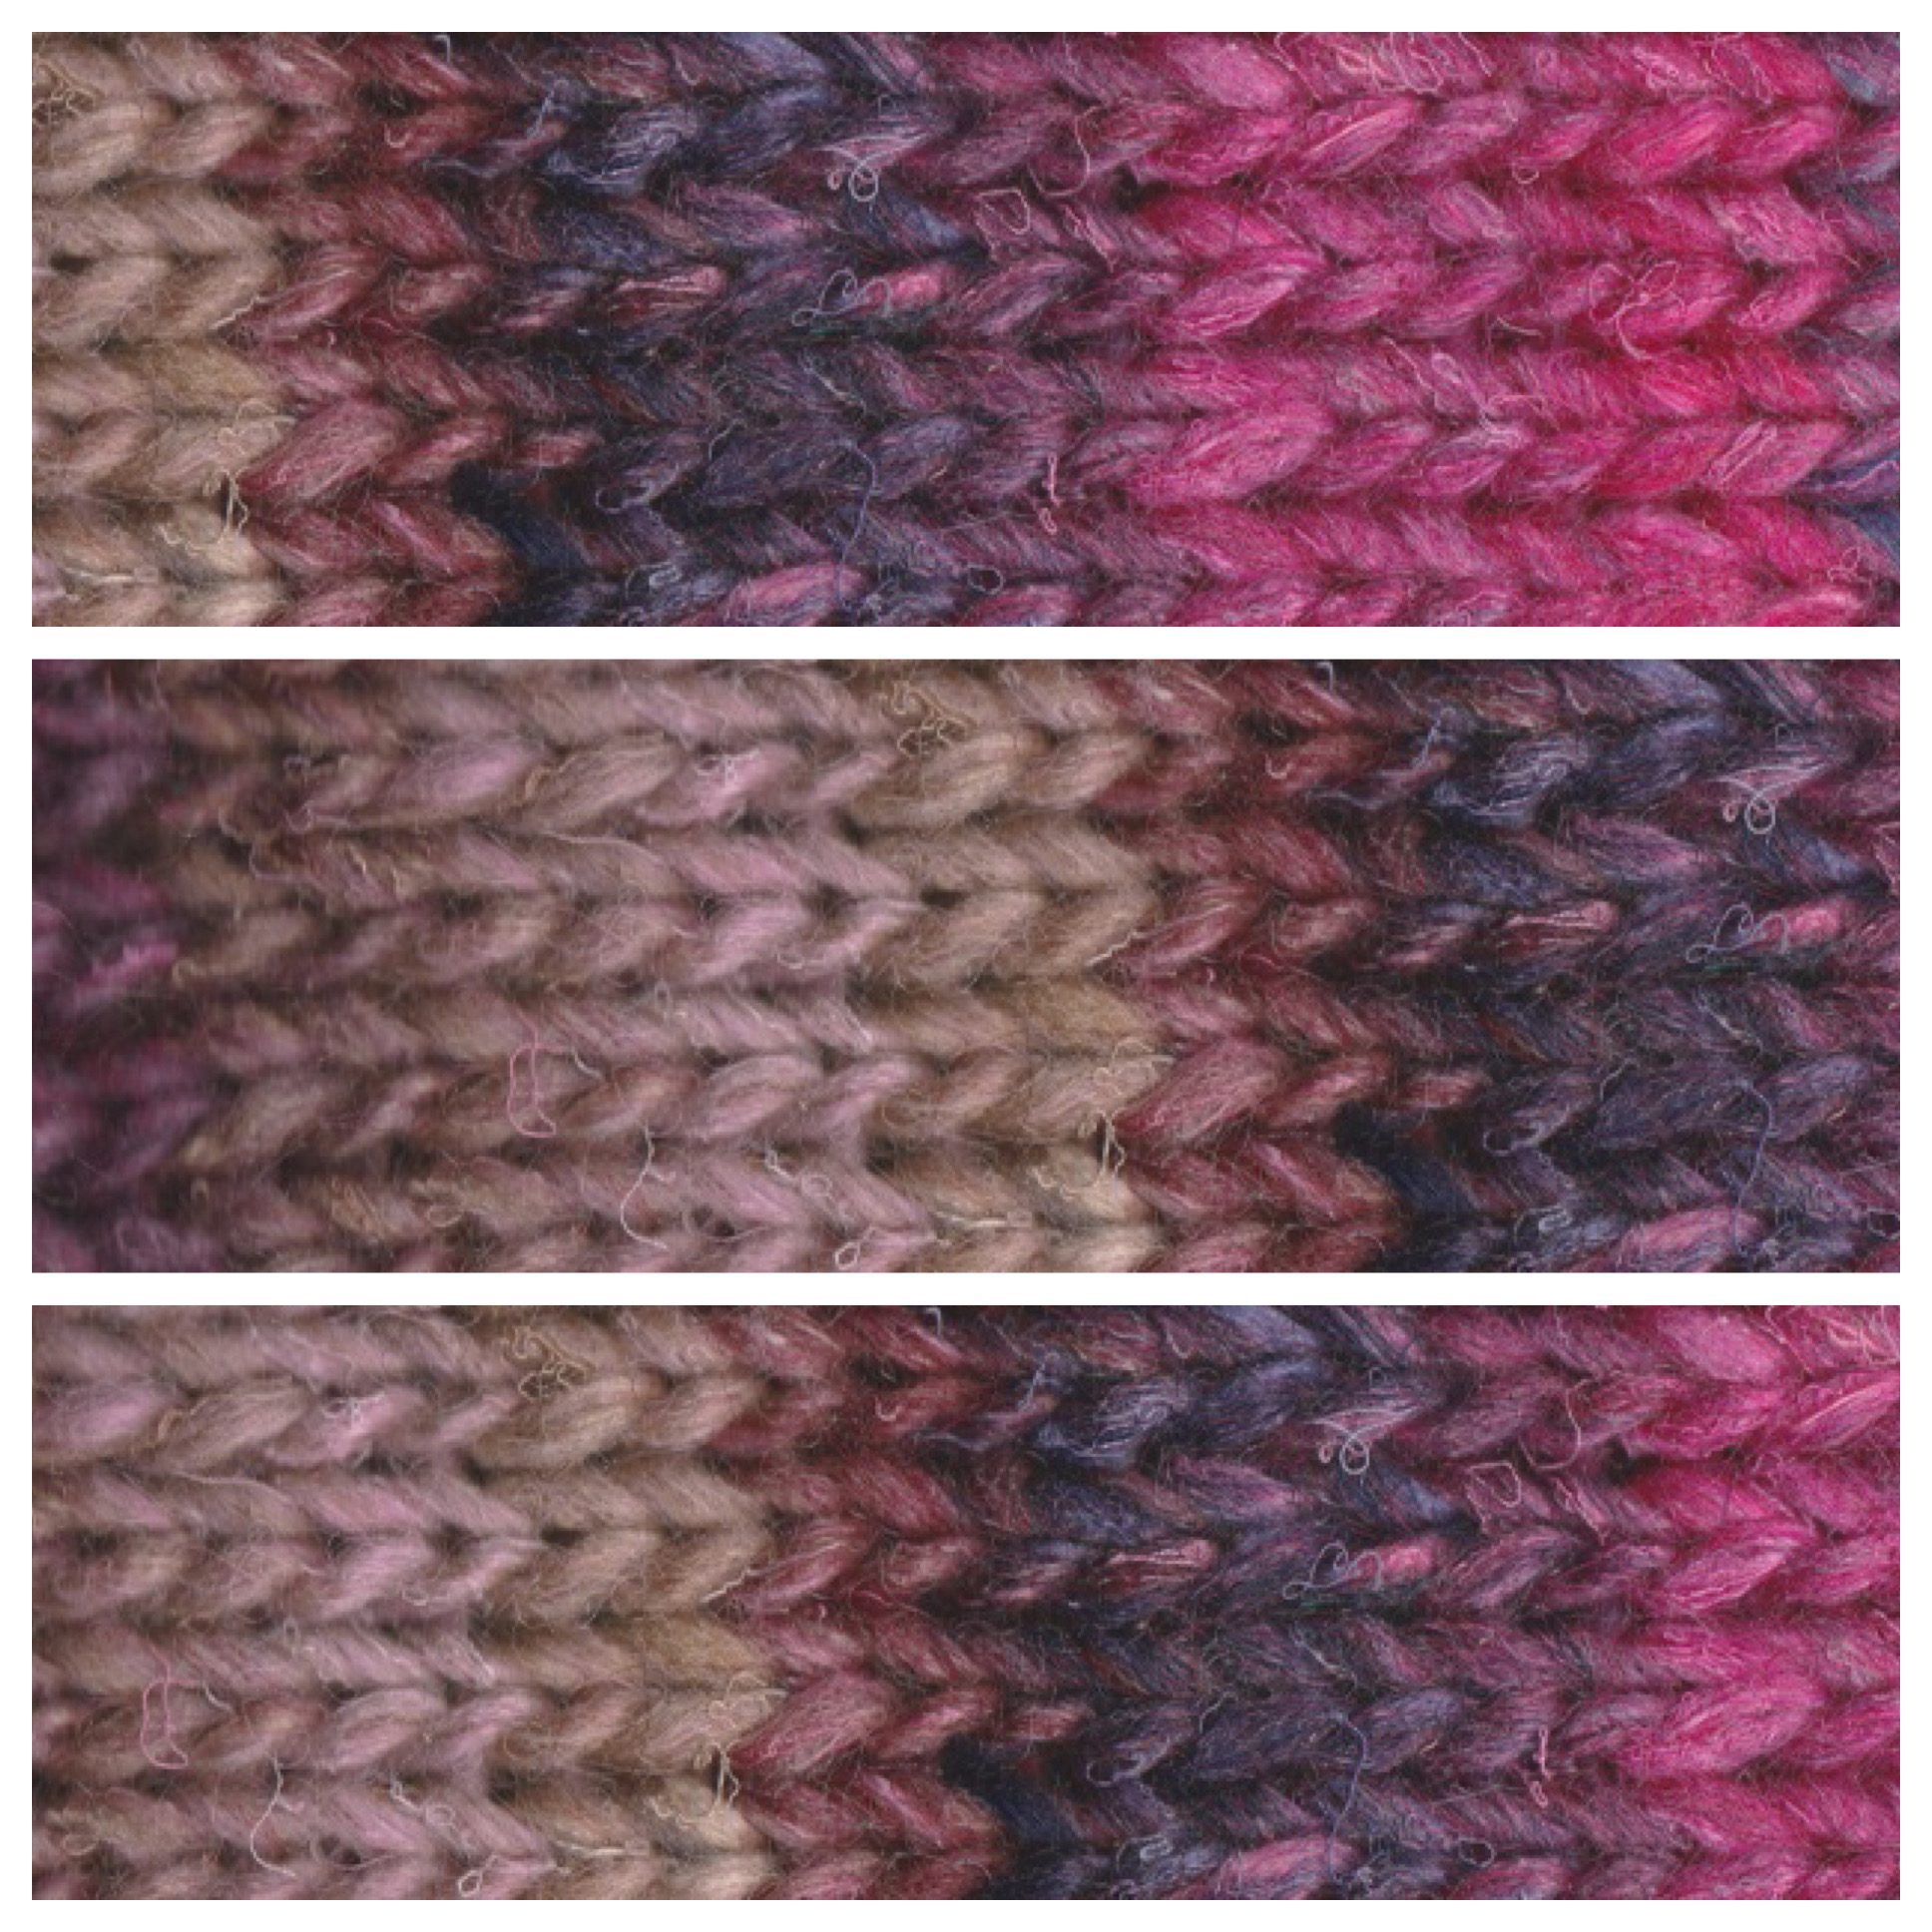 Noro - Silk Garden Sock Yarn, Color S205 - Morioka